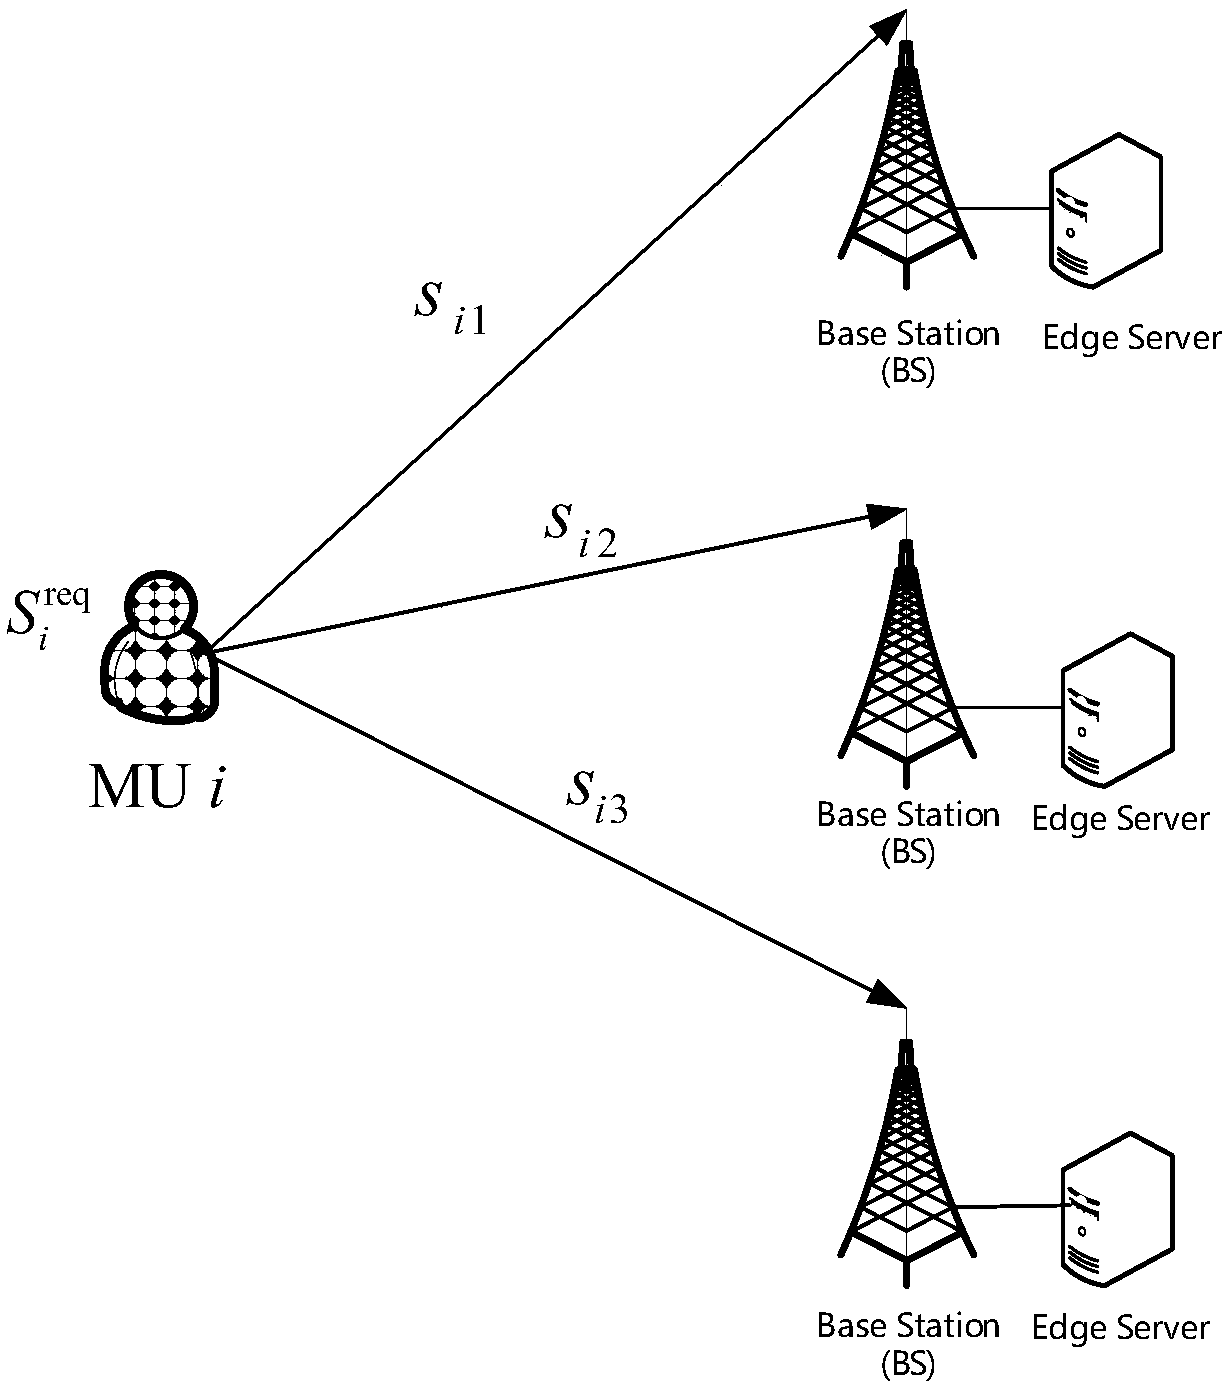 Brent delay optimization method for mobile edge computing based on non-orthogonal multiple access in multi-base station scenarios